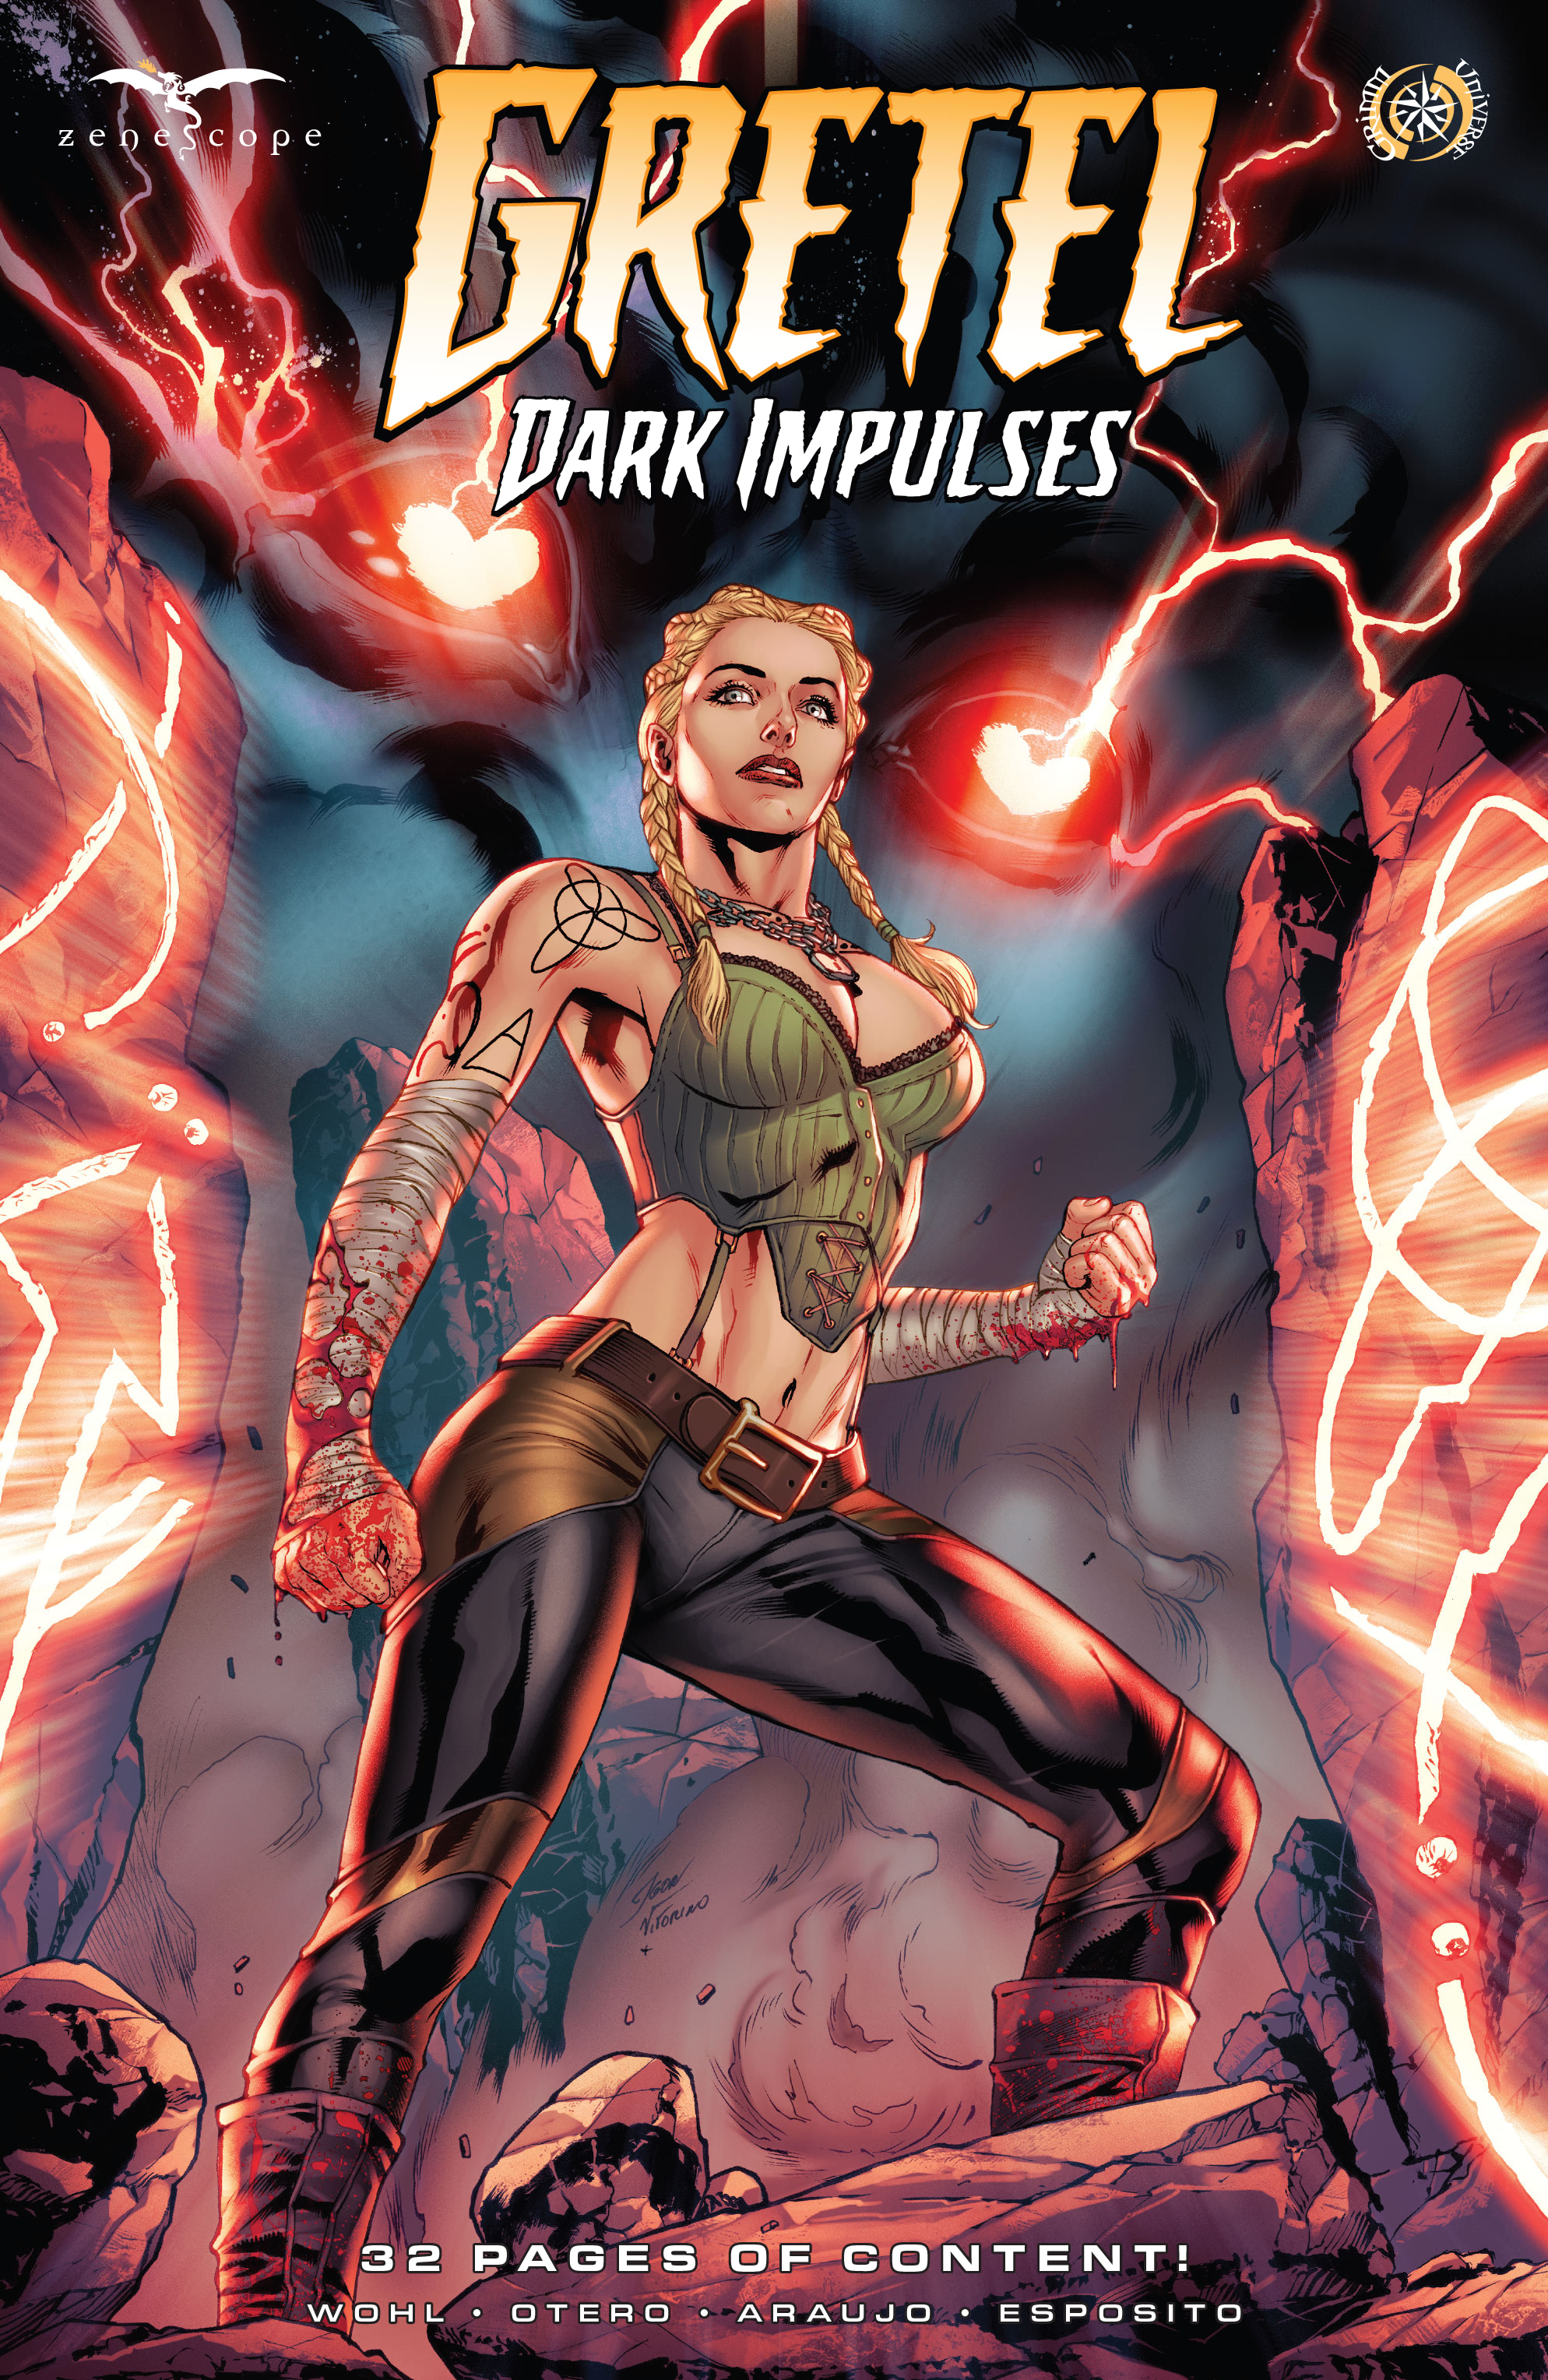 Read online Gretel: Dark Impulses comic -  Issue # Full - 1